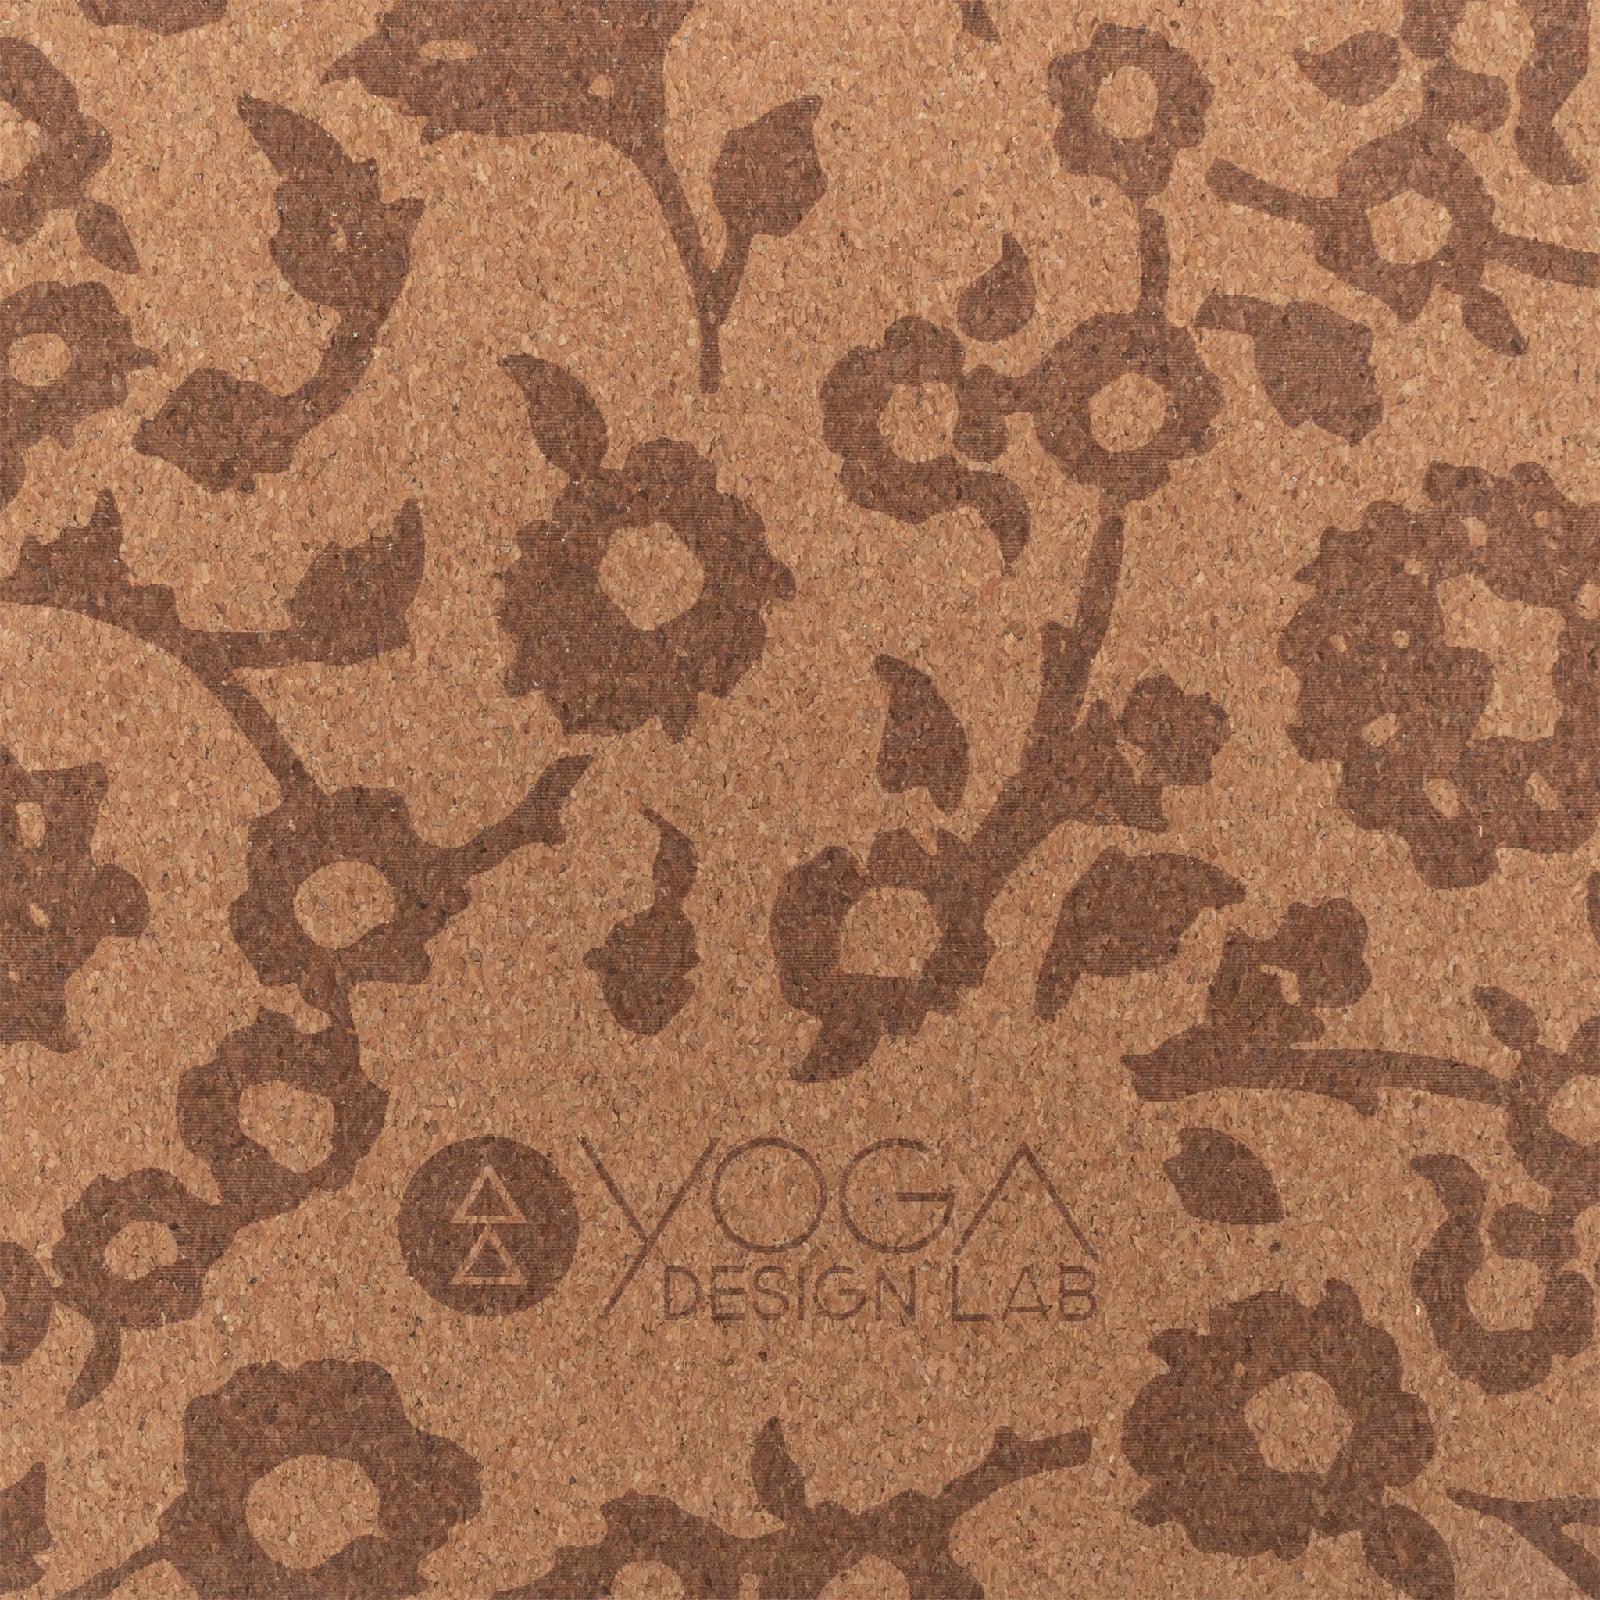 Cork Yoga Mat - Floral - Batik - Tonal - Best For Eco-Conscious Yogis - Yoga Design Lab 